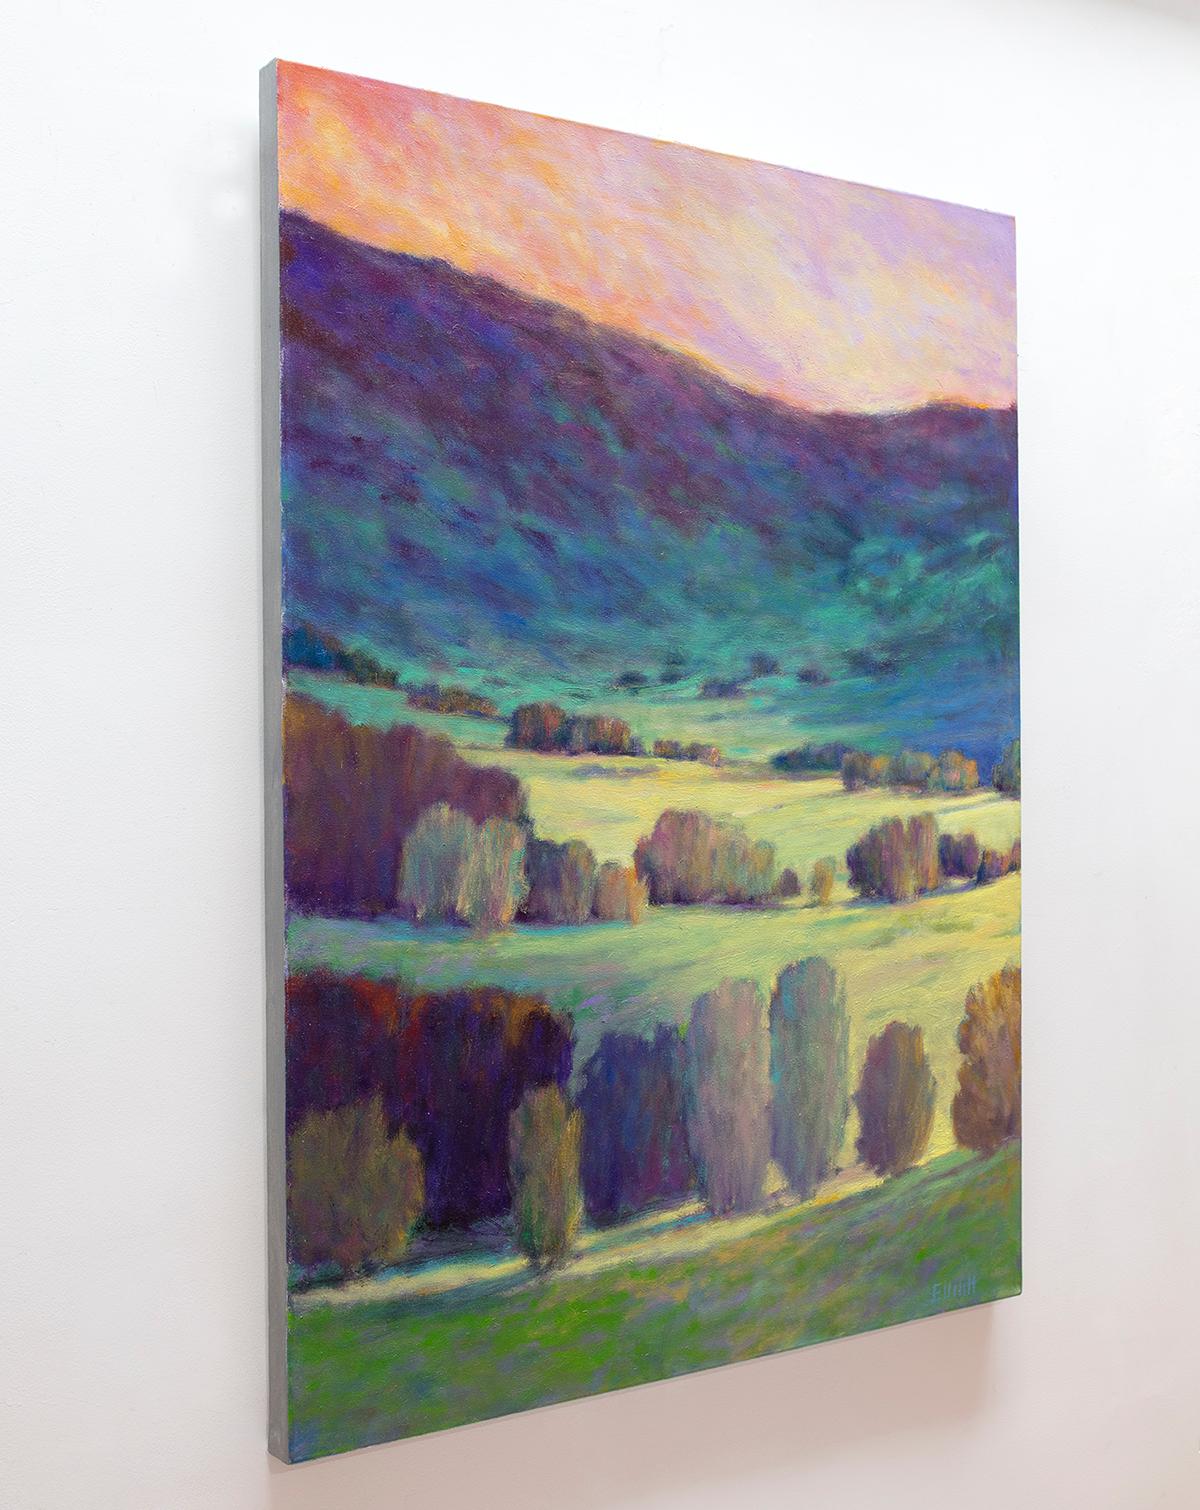 Abstract Painting Ken Elliott - " verts enluminés ", peinture de paysage abstrait